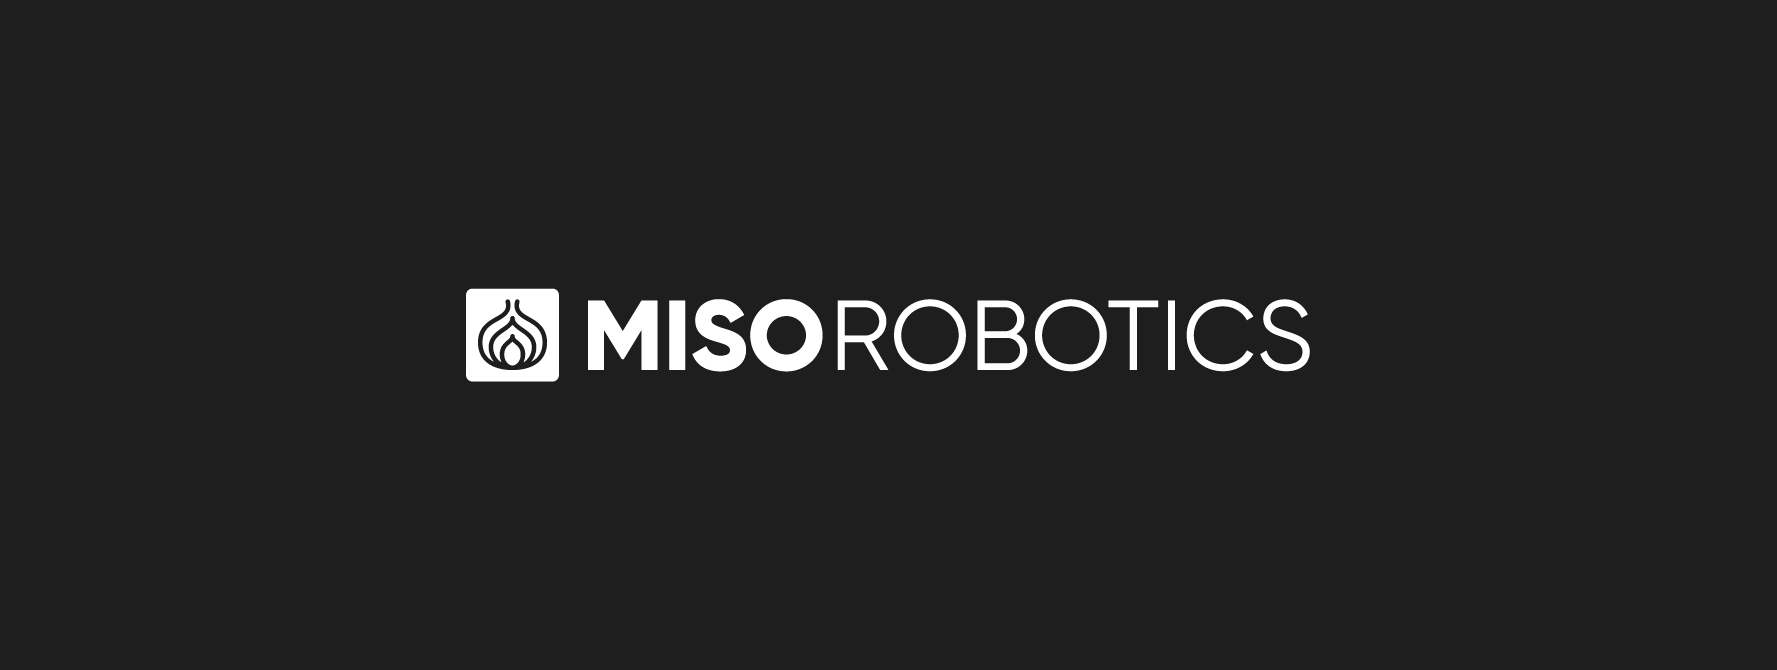 misorobotics.com